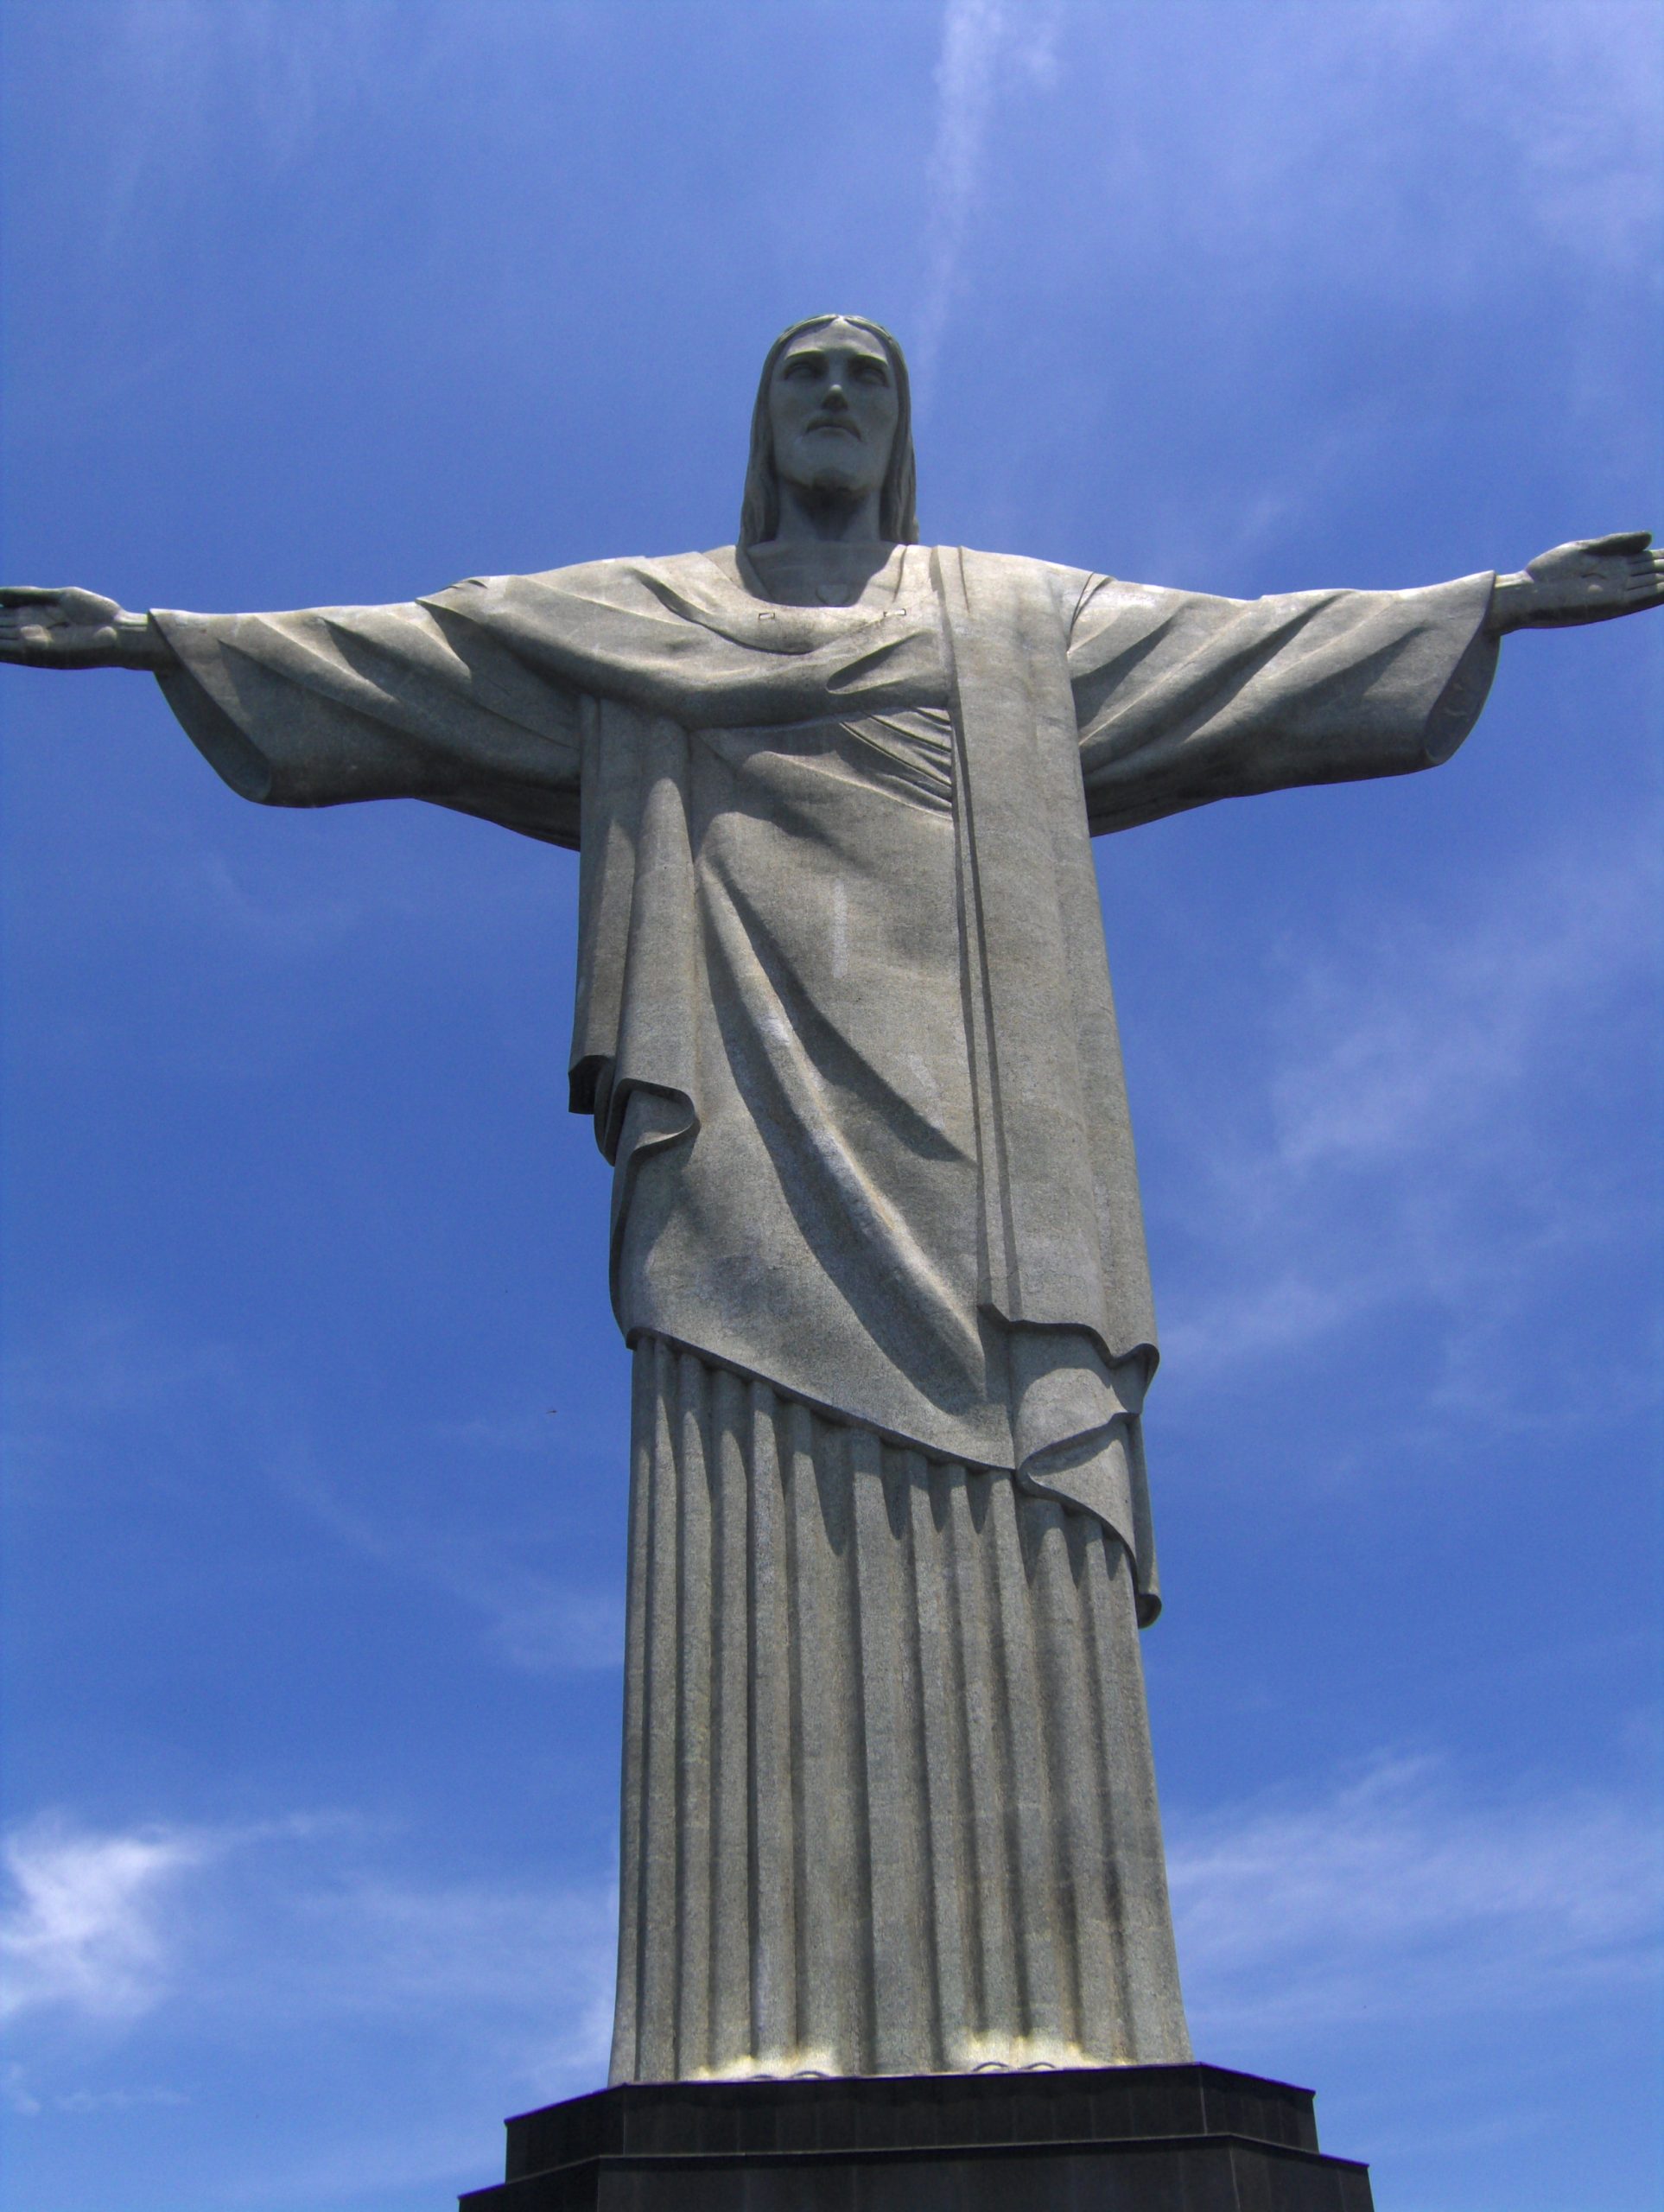 Visiter Rio de Janeiro au Brésil en 1 semaine